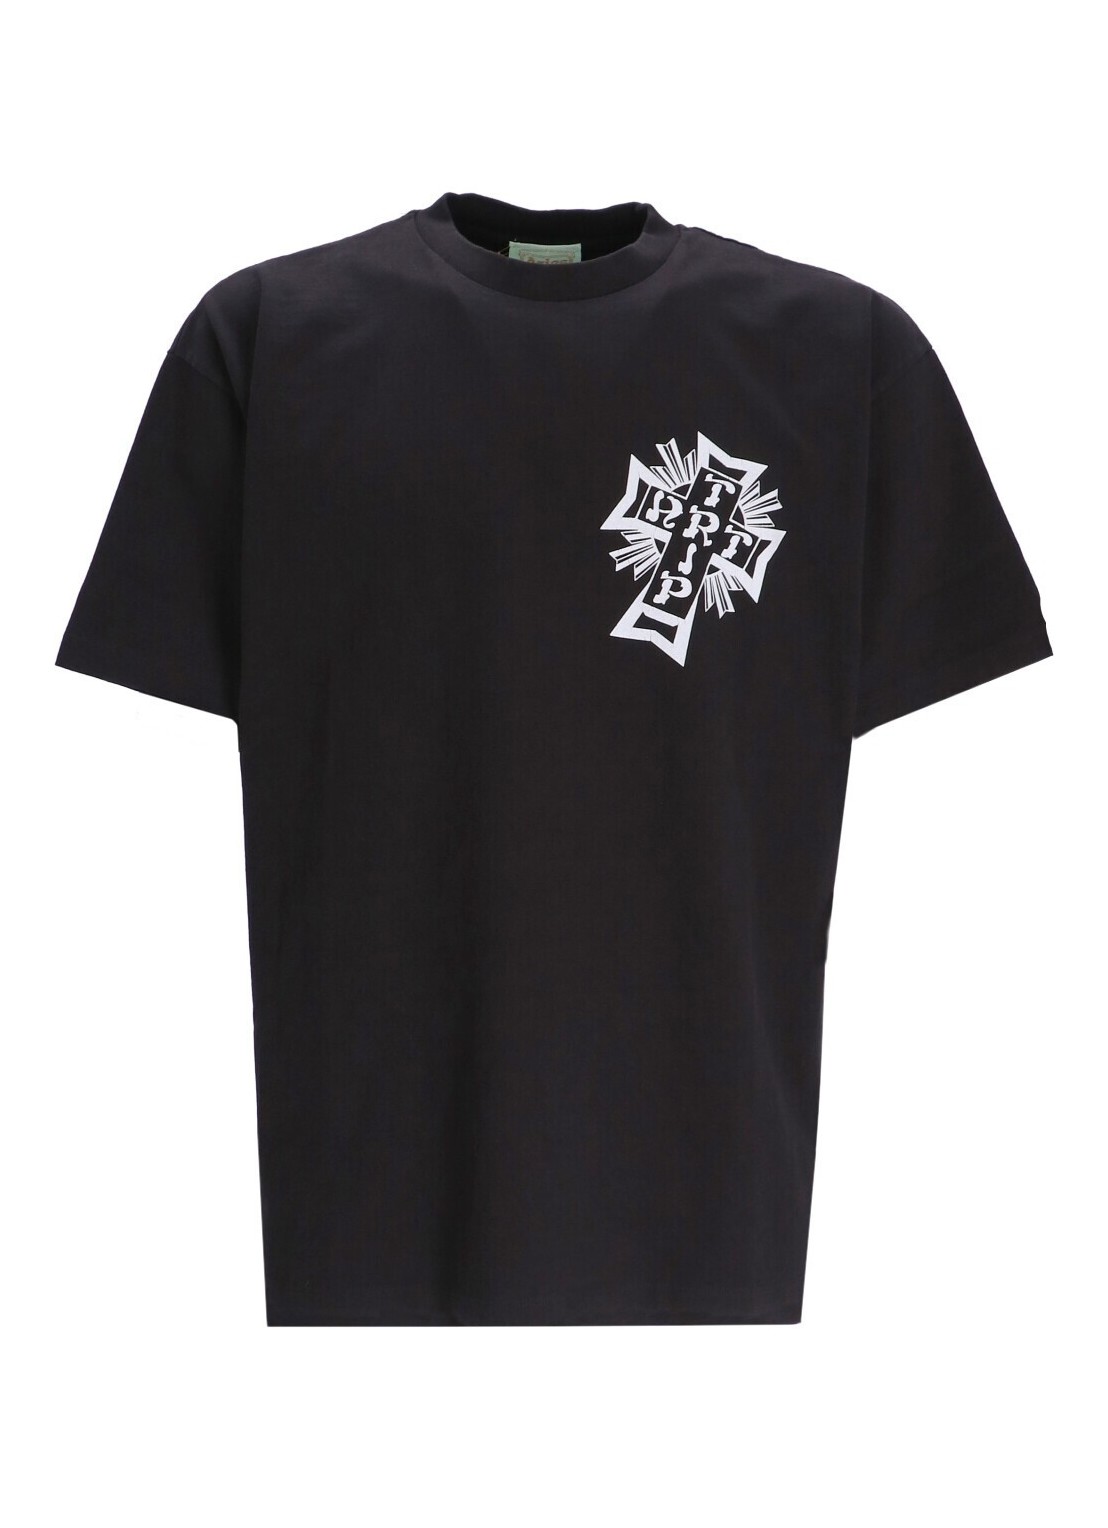 Camiseta aries t-shirt man vintage lords of art trip ss tee ctar60008 washed black talla XL
 